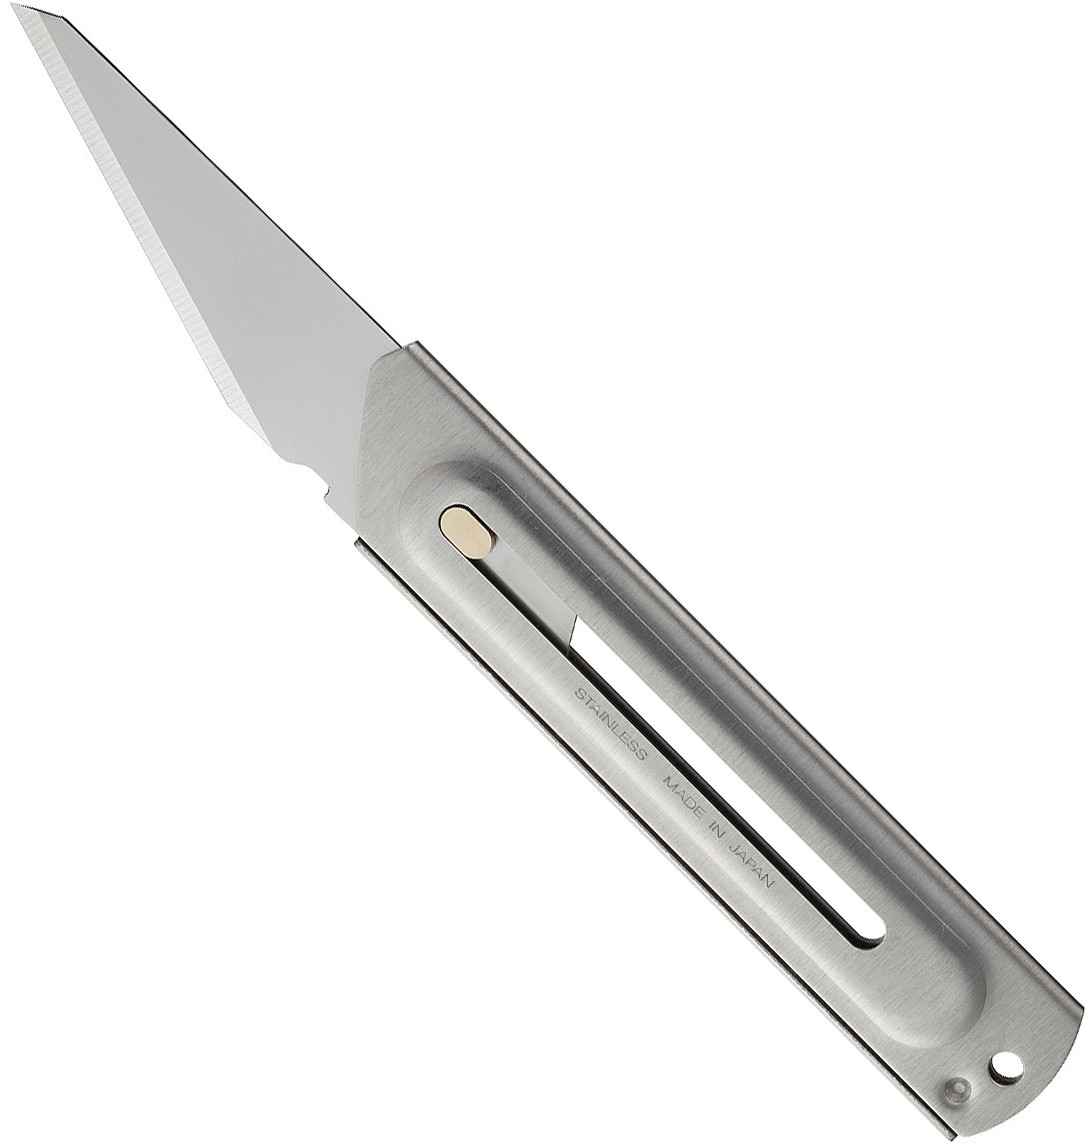 Хозяйственный нож 20 мм OLFA OL-CK-2 - фото